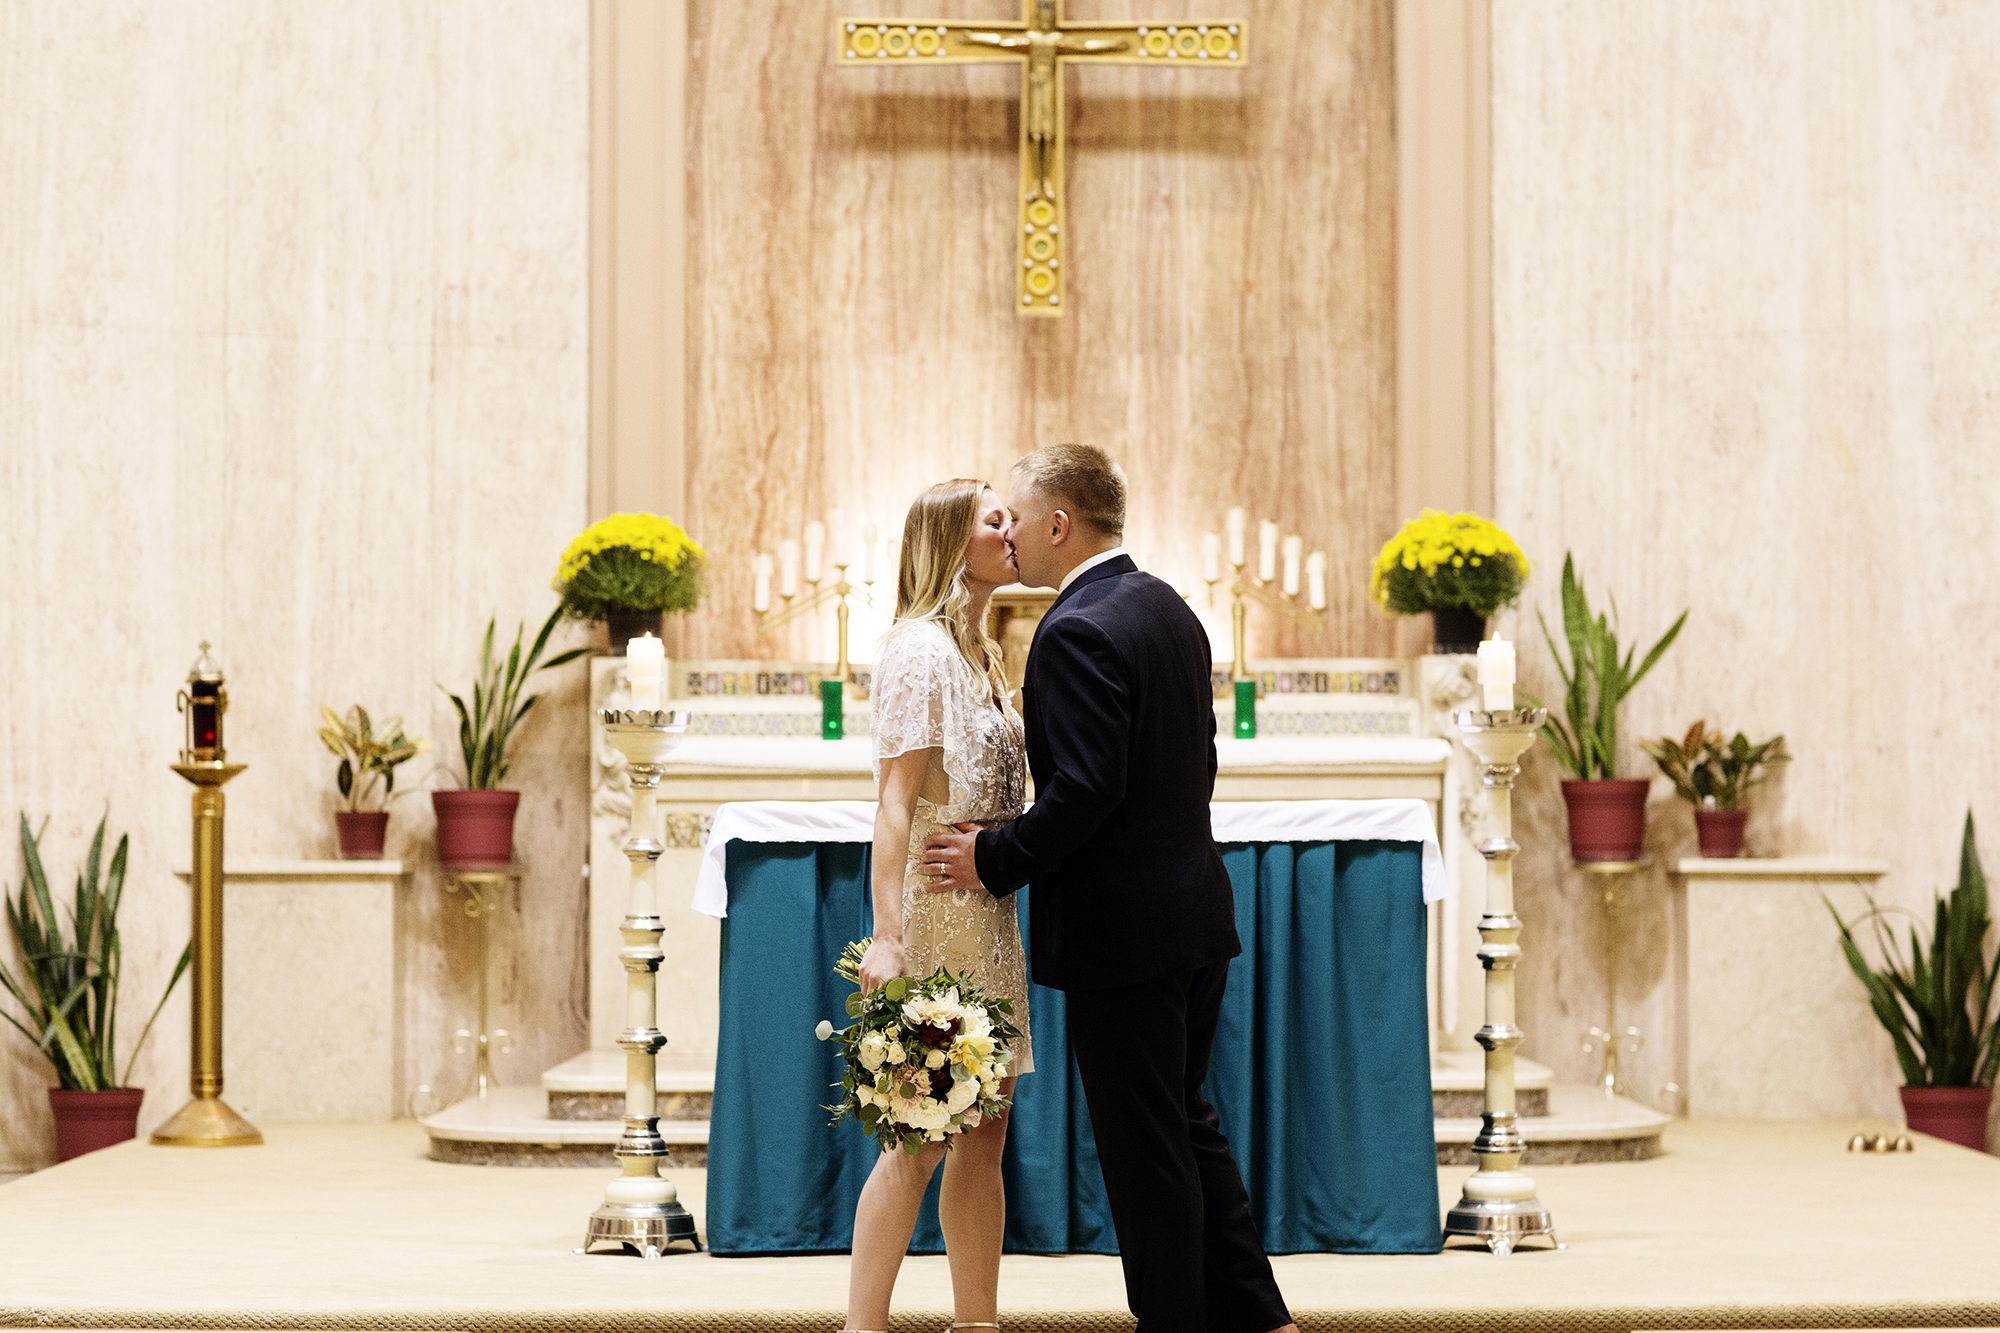 Private Church Ceremony Wedding Photos | Photography by Photogen Inc. | Eliesa Johnson | Based in Minneapolis, Minnesota